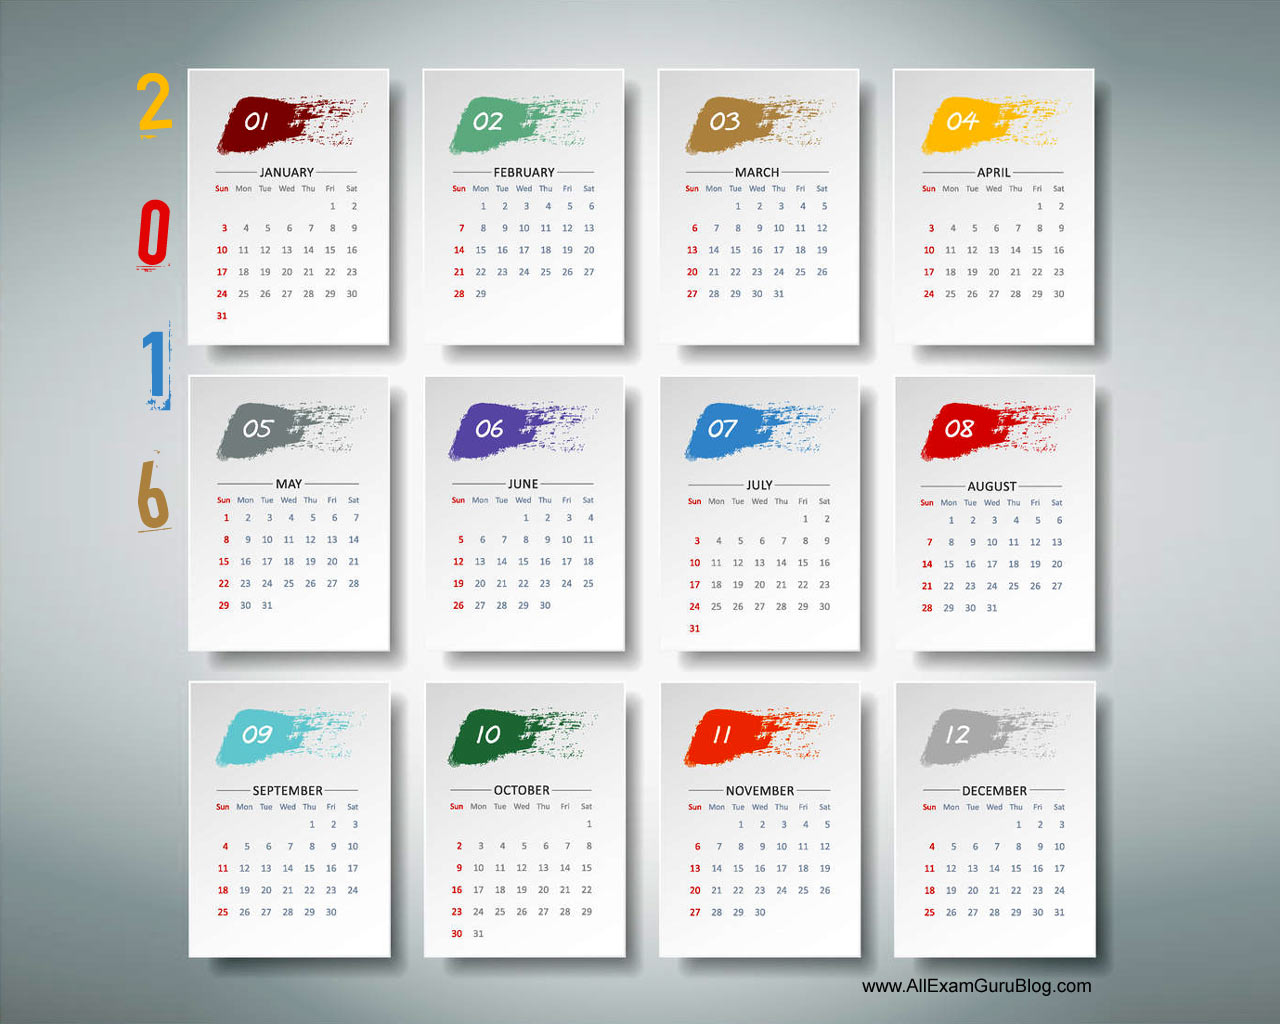 2016 Year Calendar Wallpaper Download Free 2016 Calendar by Month